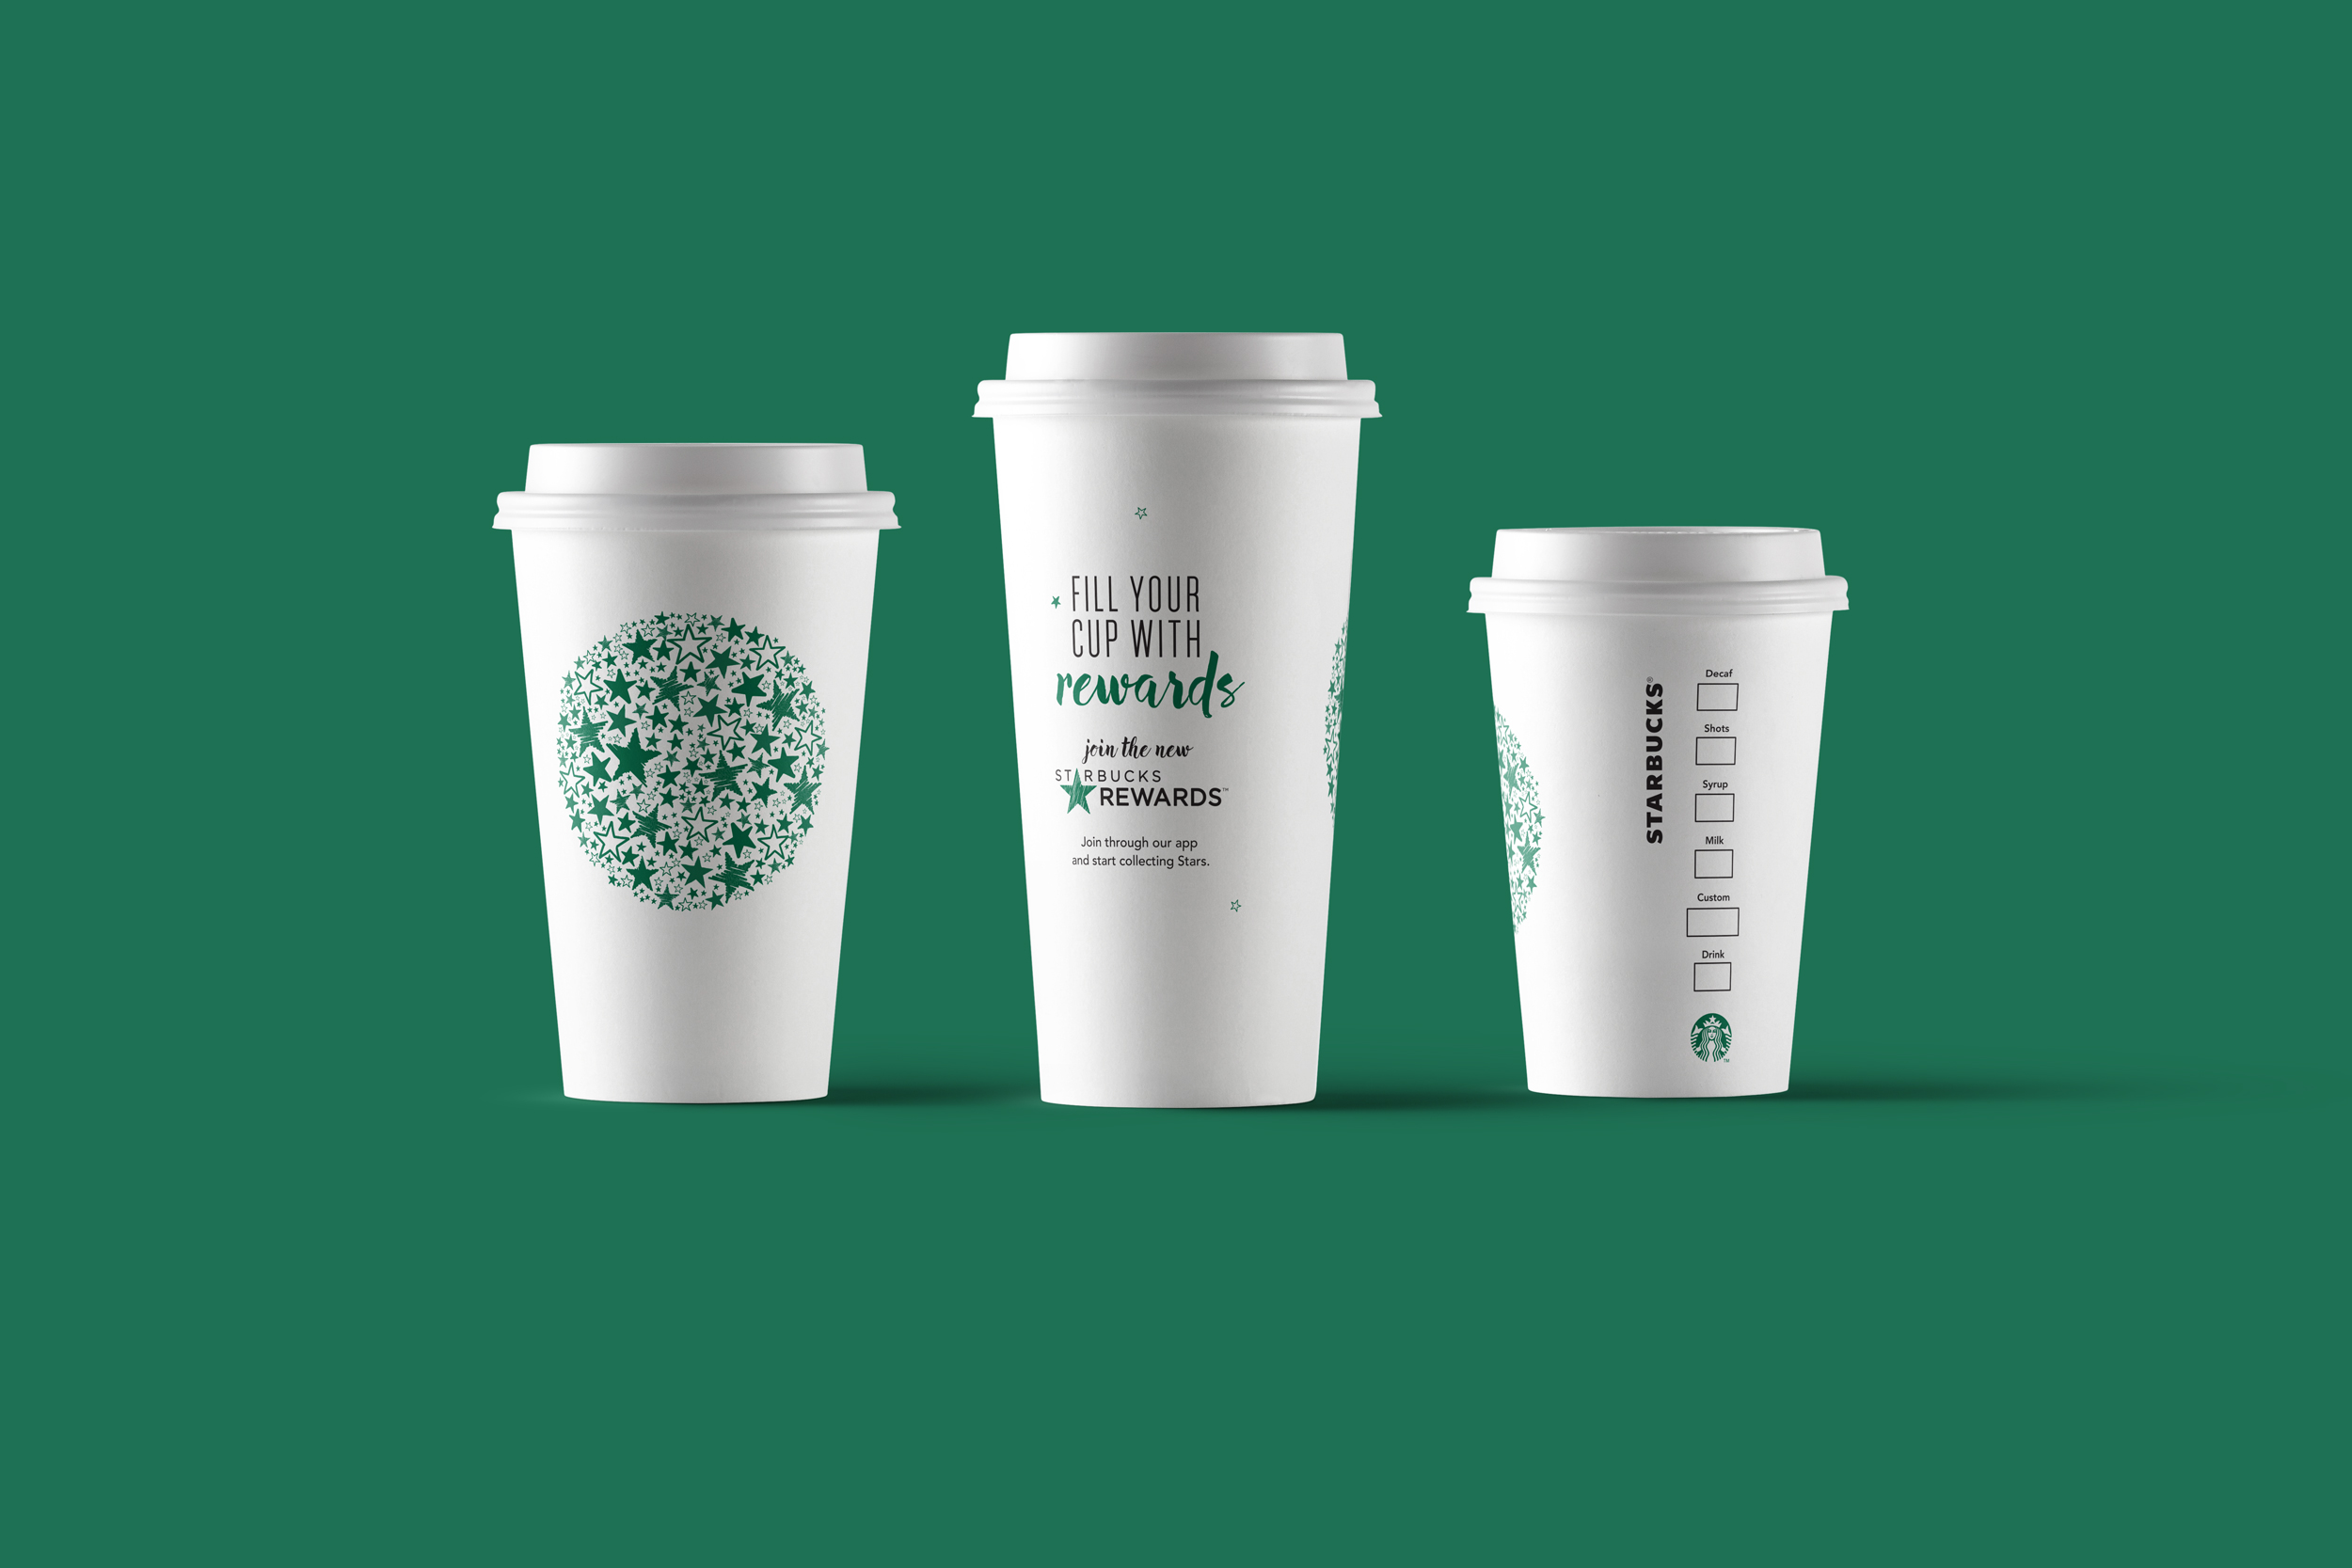 Louis Vuitton Starbucks Cup  Natural Resource Department